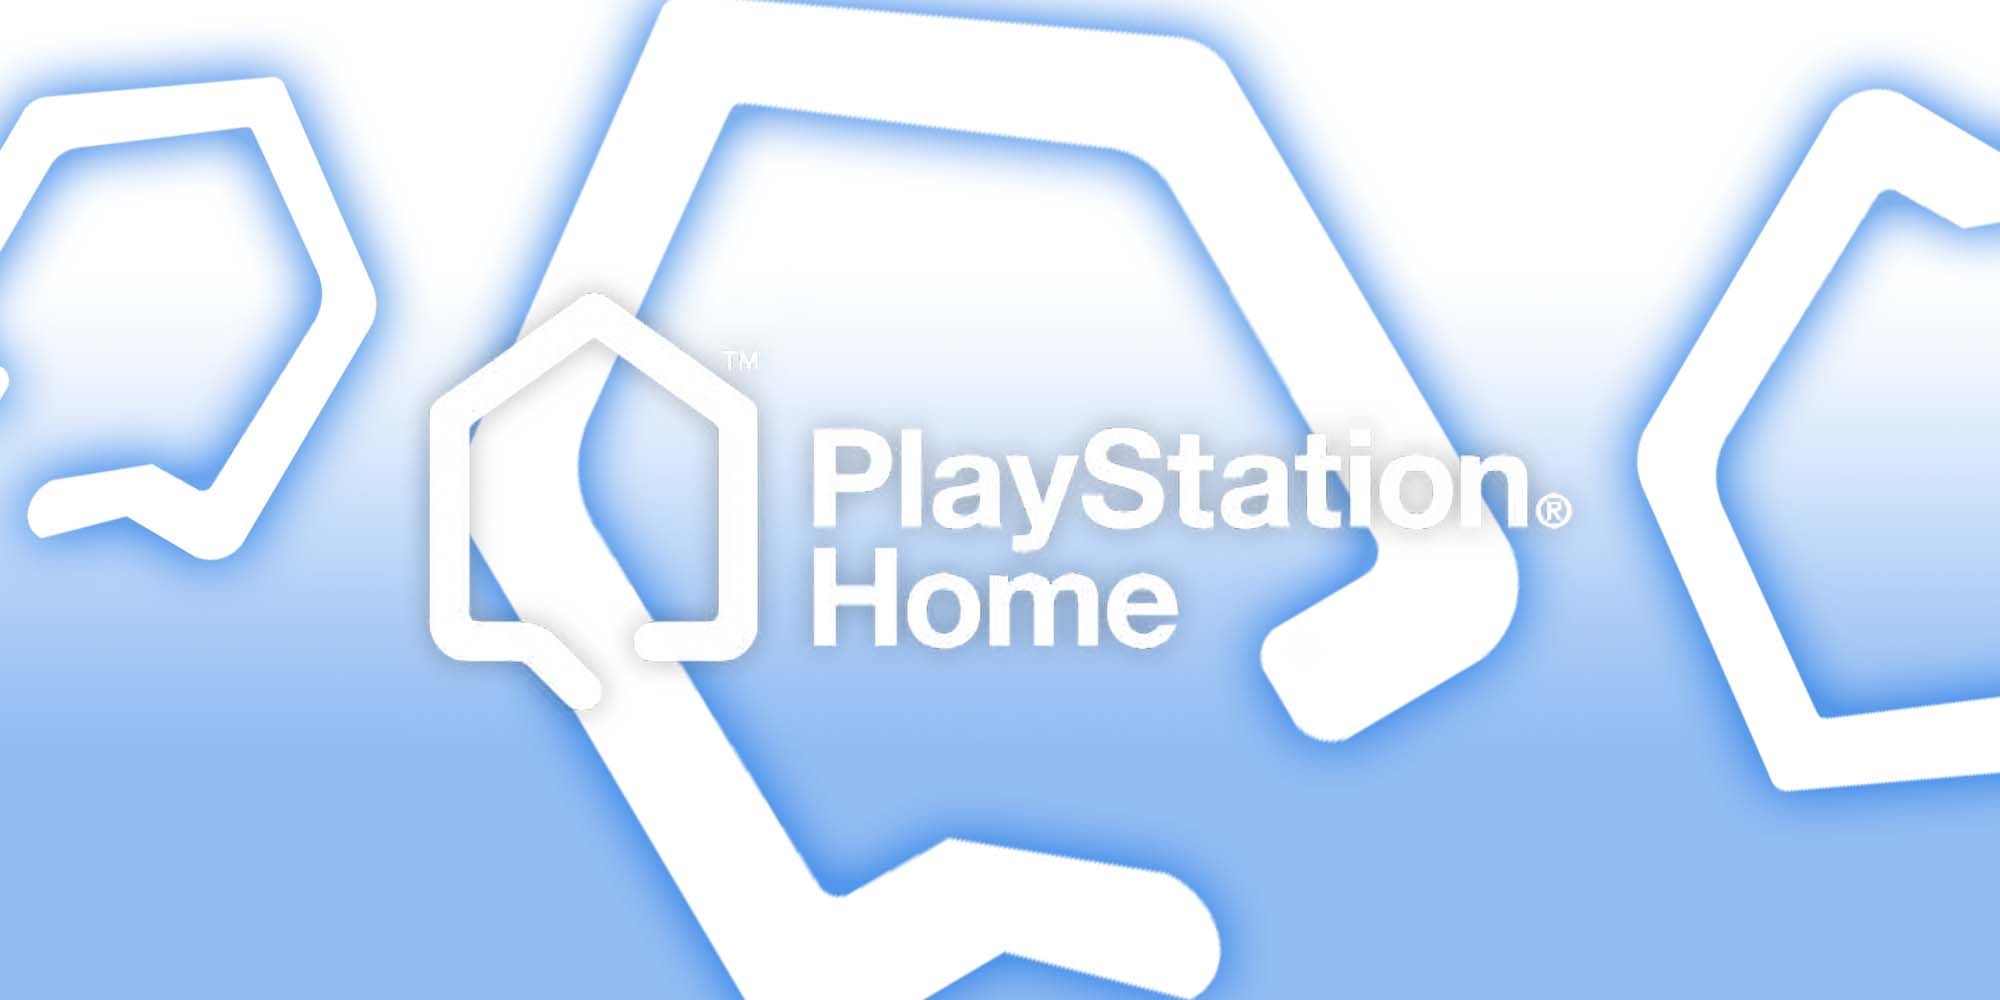 PlayStation Home Nostalgia crece gracias a Metaverse Rave Video